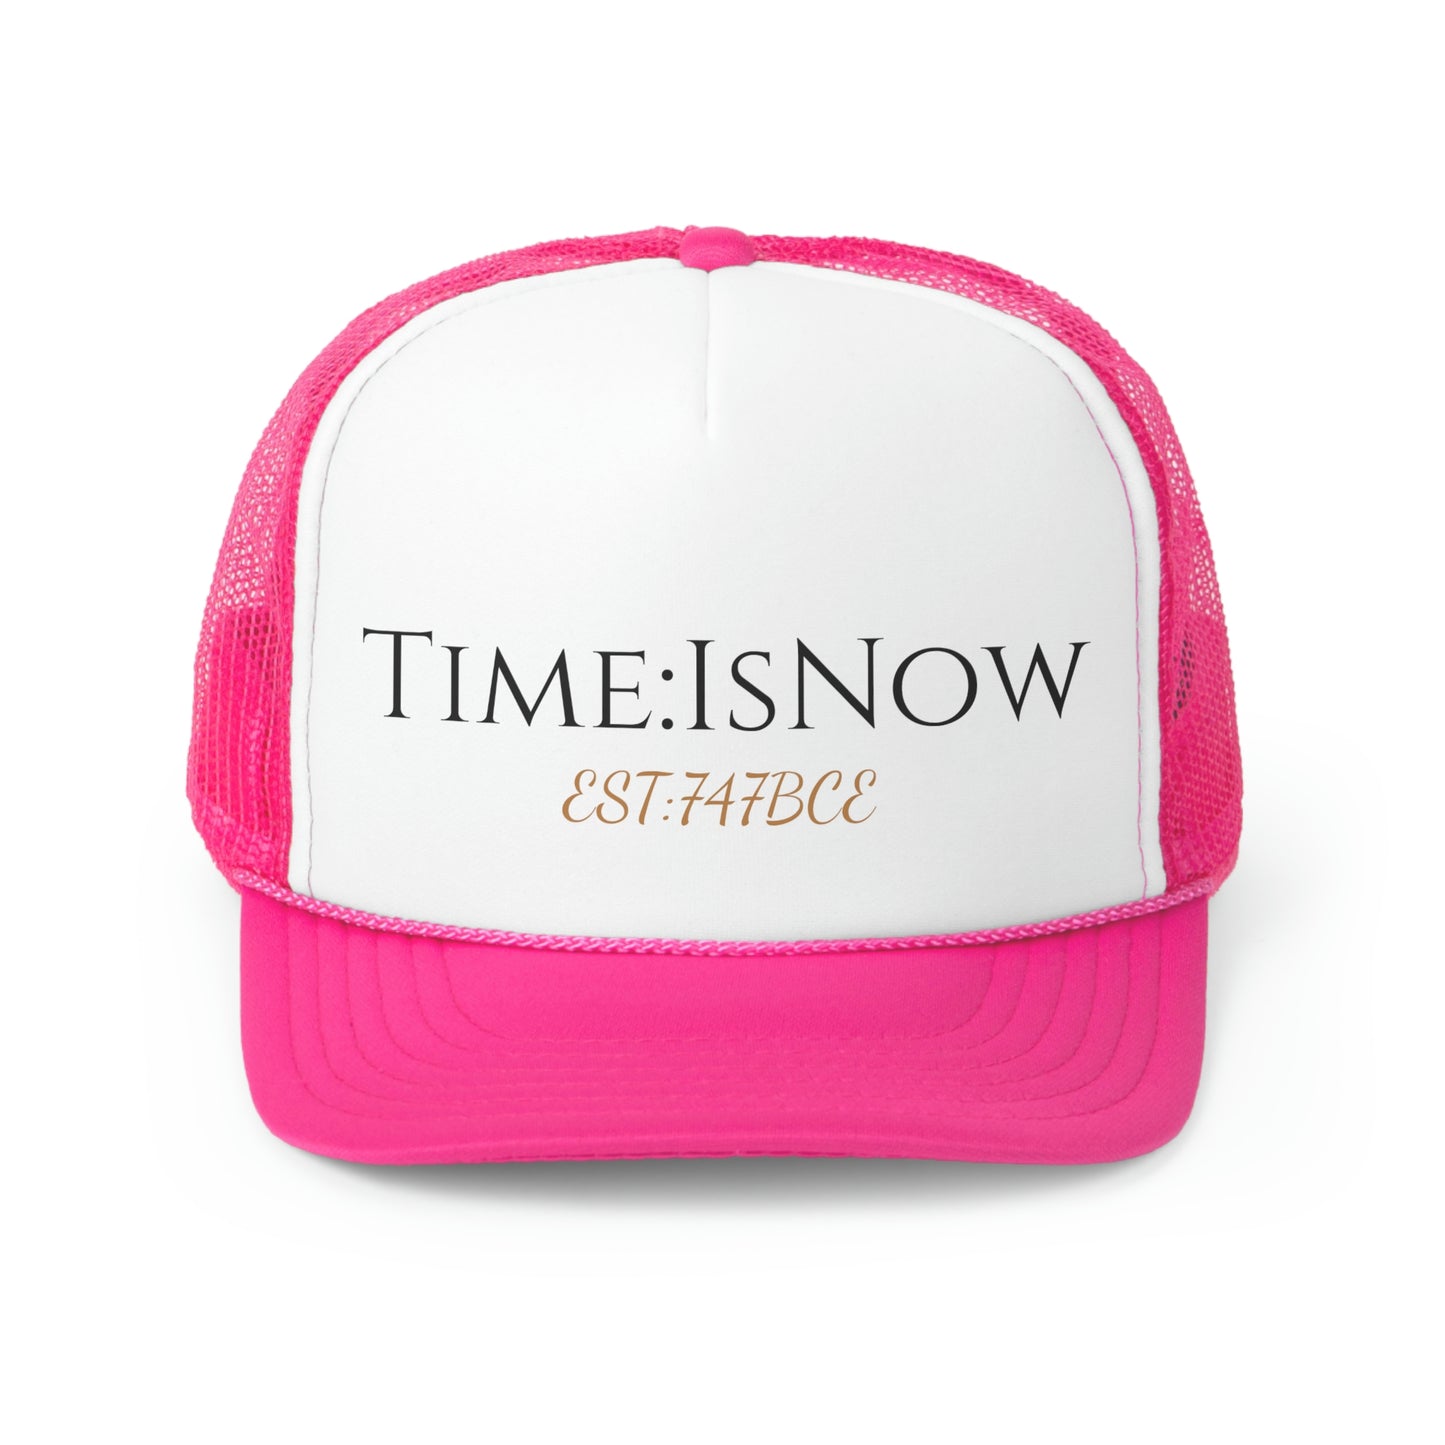 Time:isNow Trucker